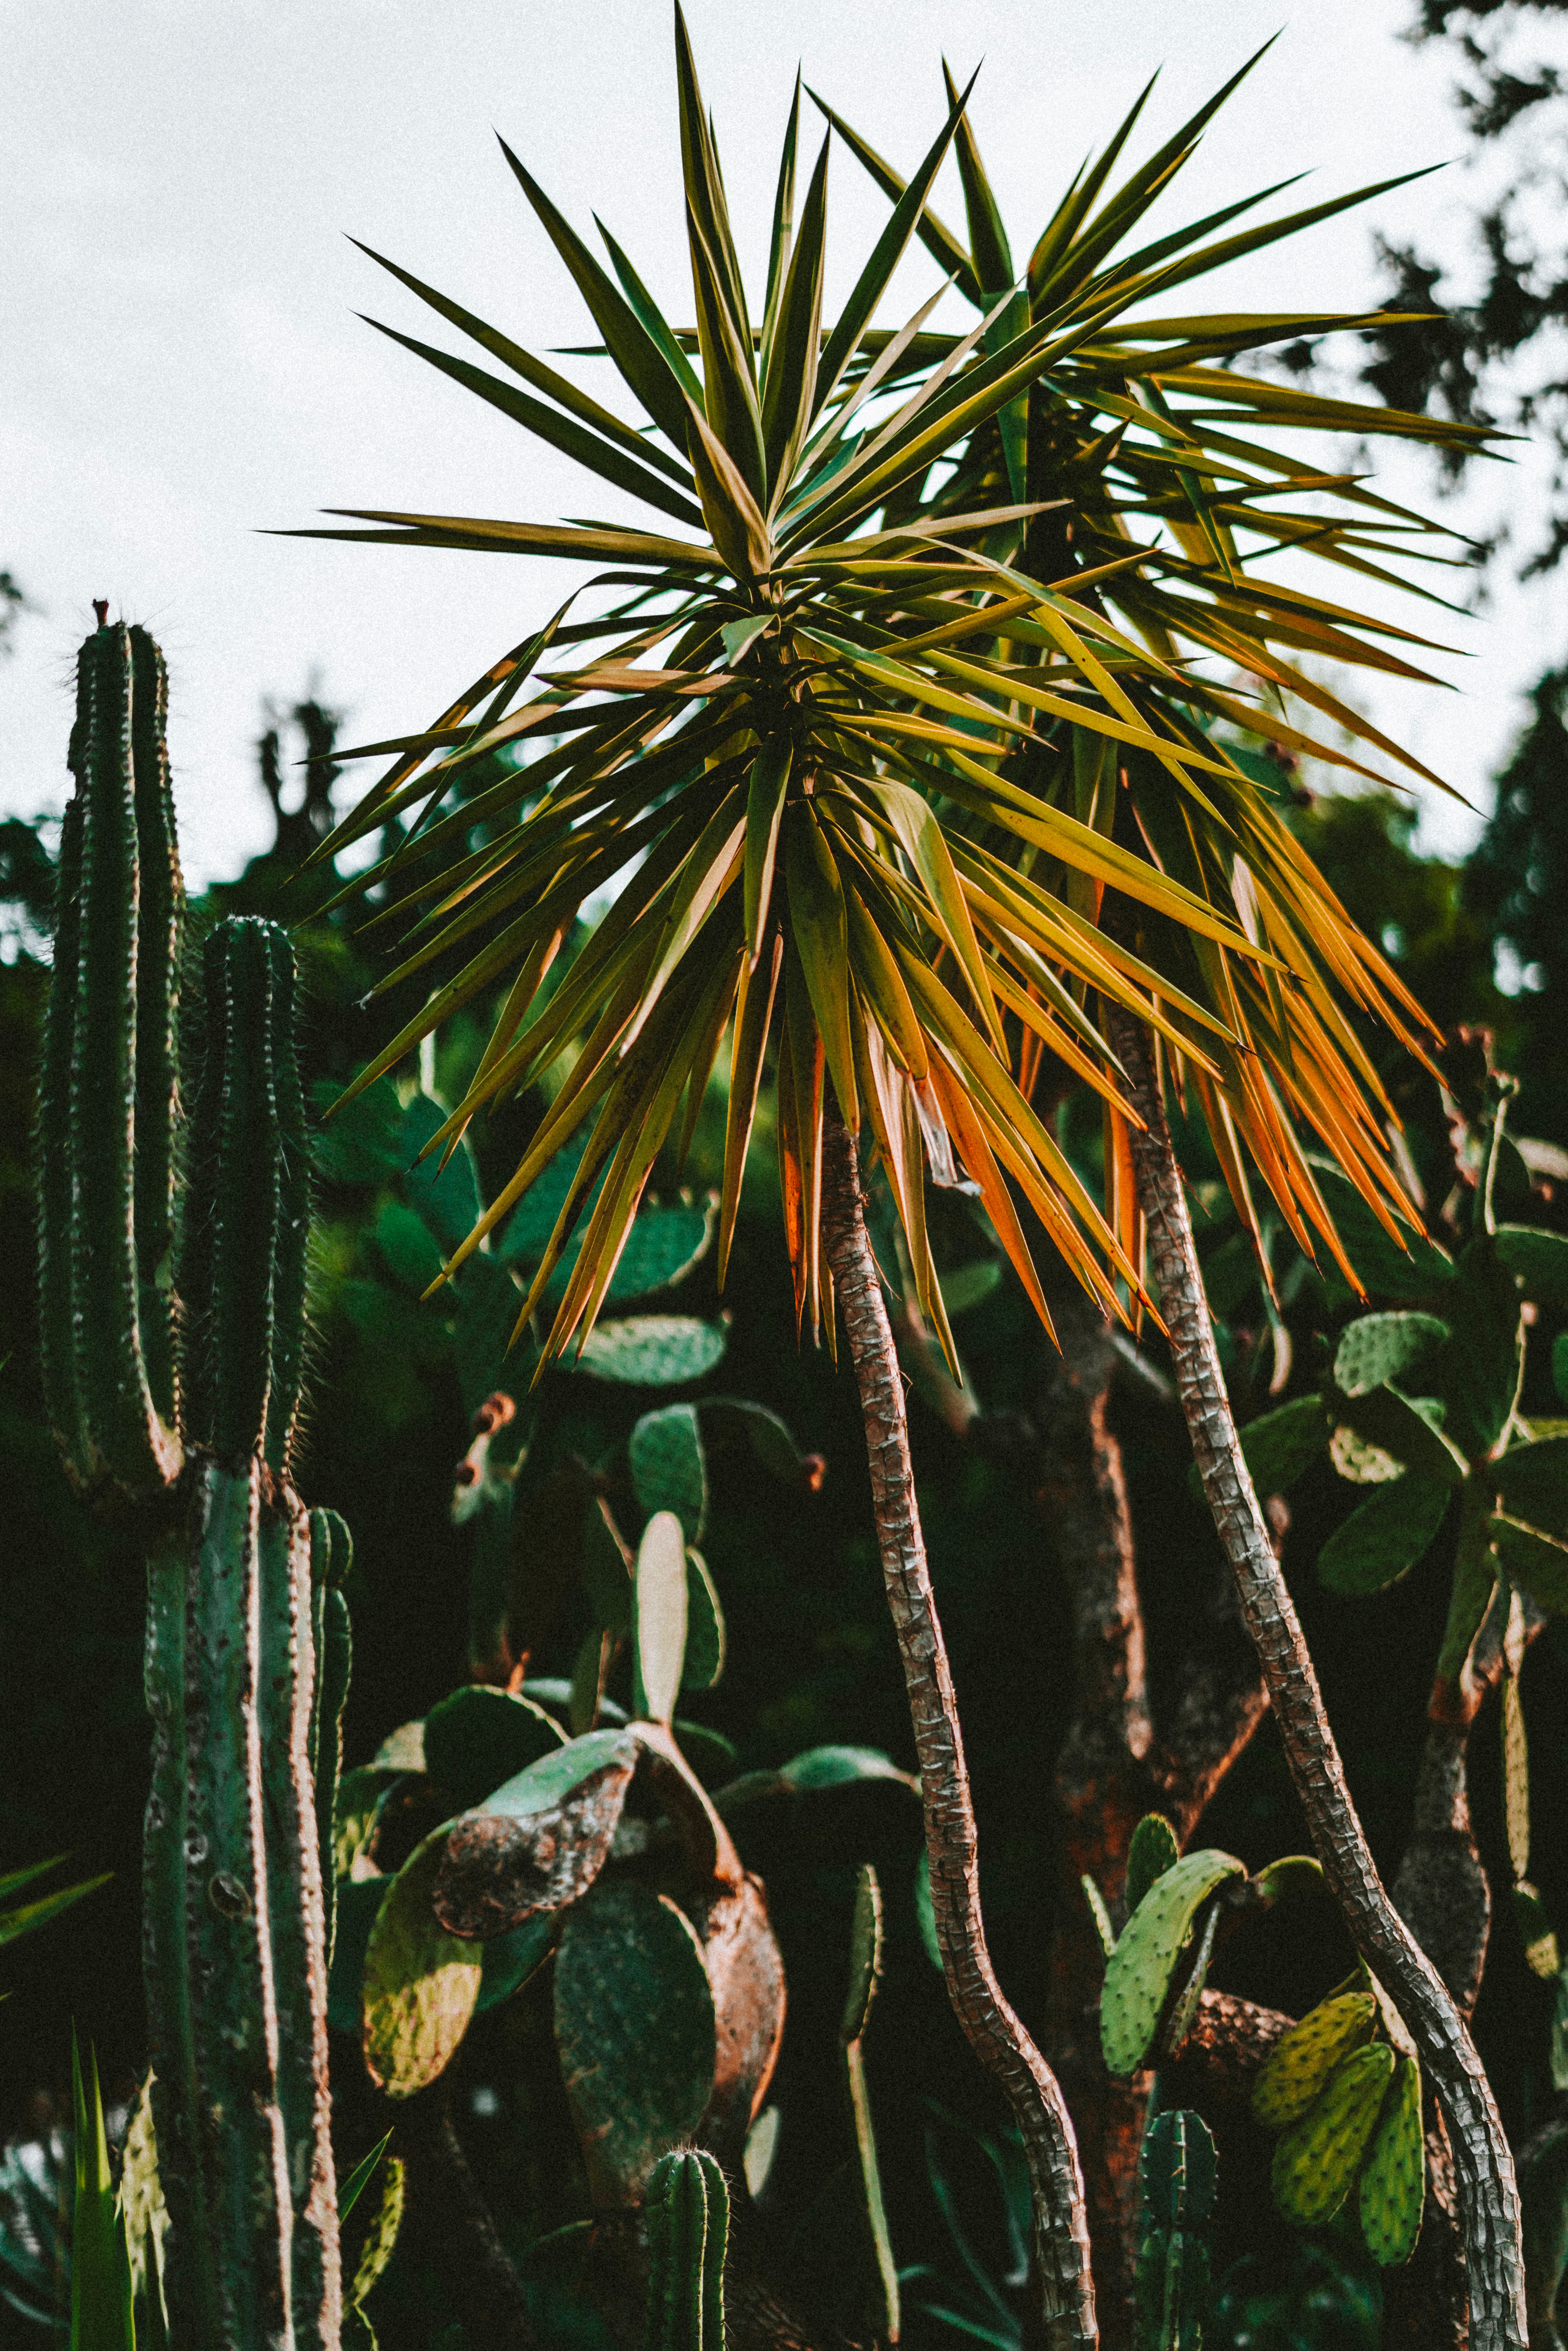 88020 descargar imagen plantas, naturaleza, cactus, palms, verde, exótico: fondos de pantalla y protectores de pantalla gratis